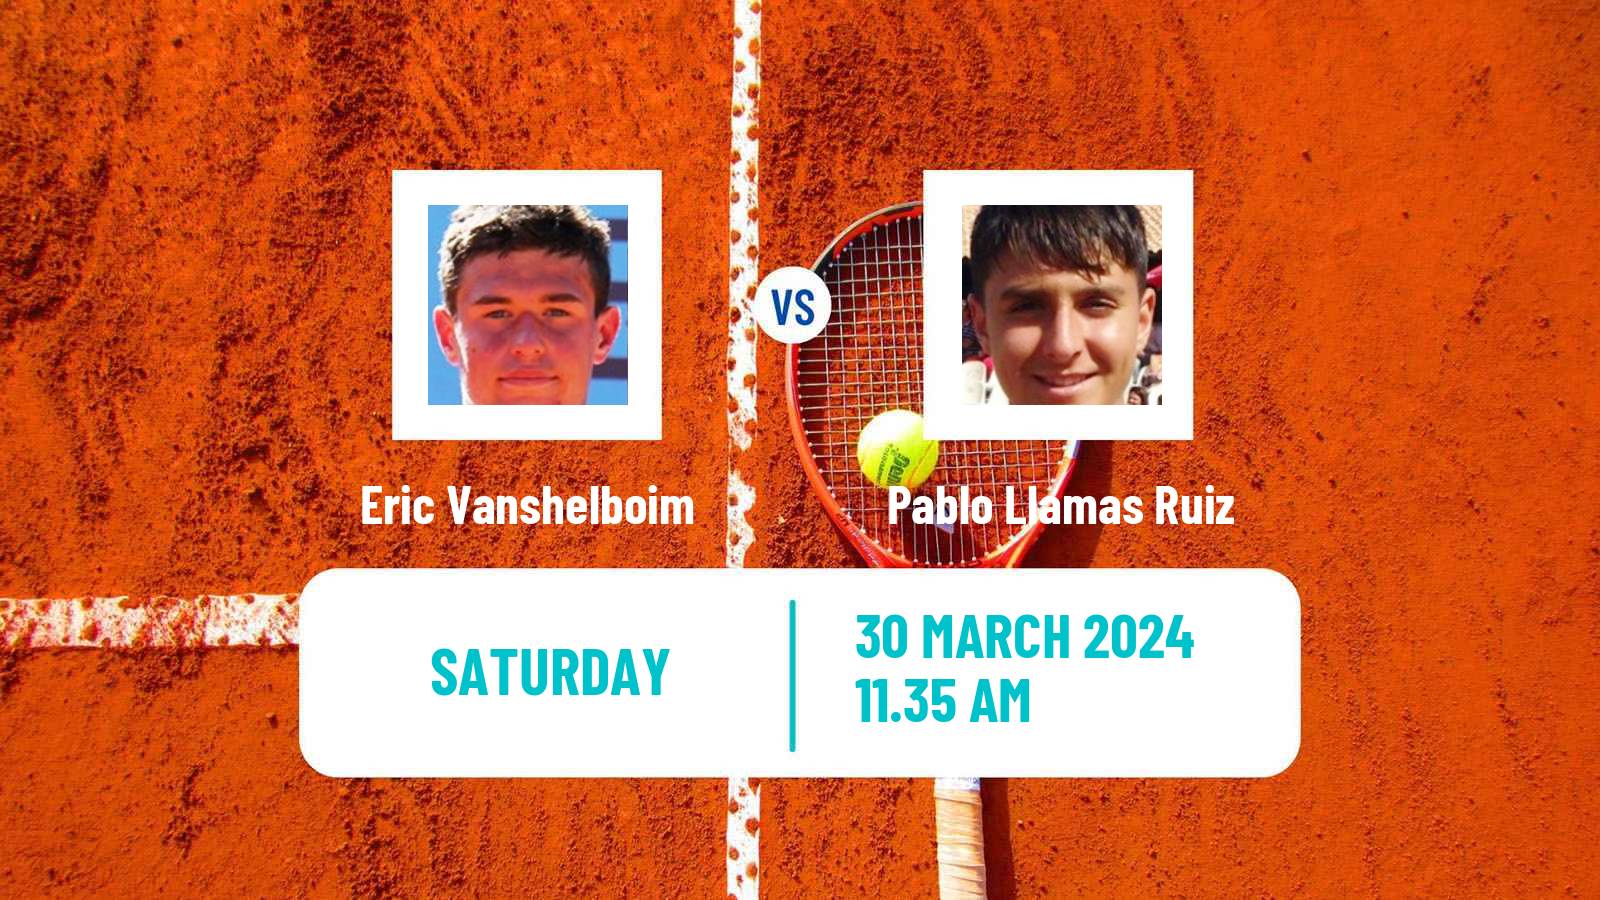 Tennis ATP Estoril Eric Vanshelboim - Pablo Llamas Ruiz